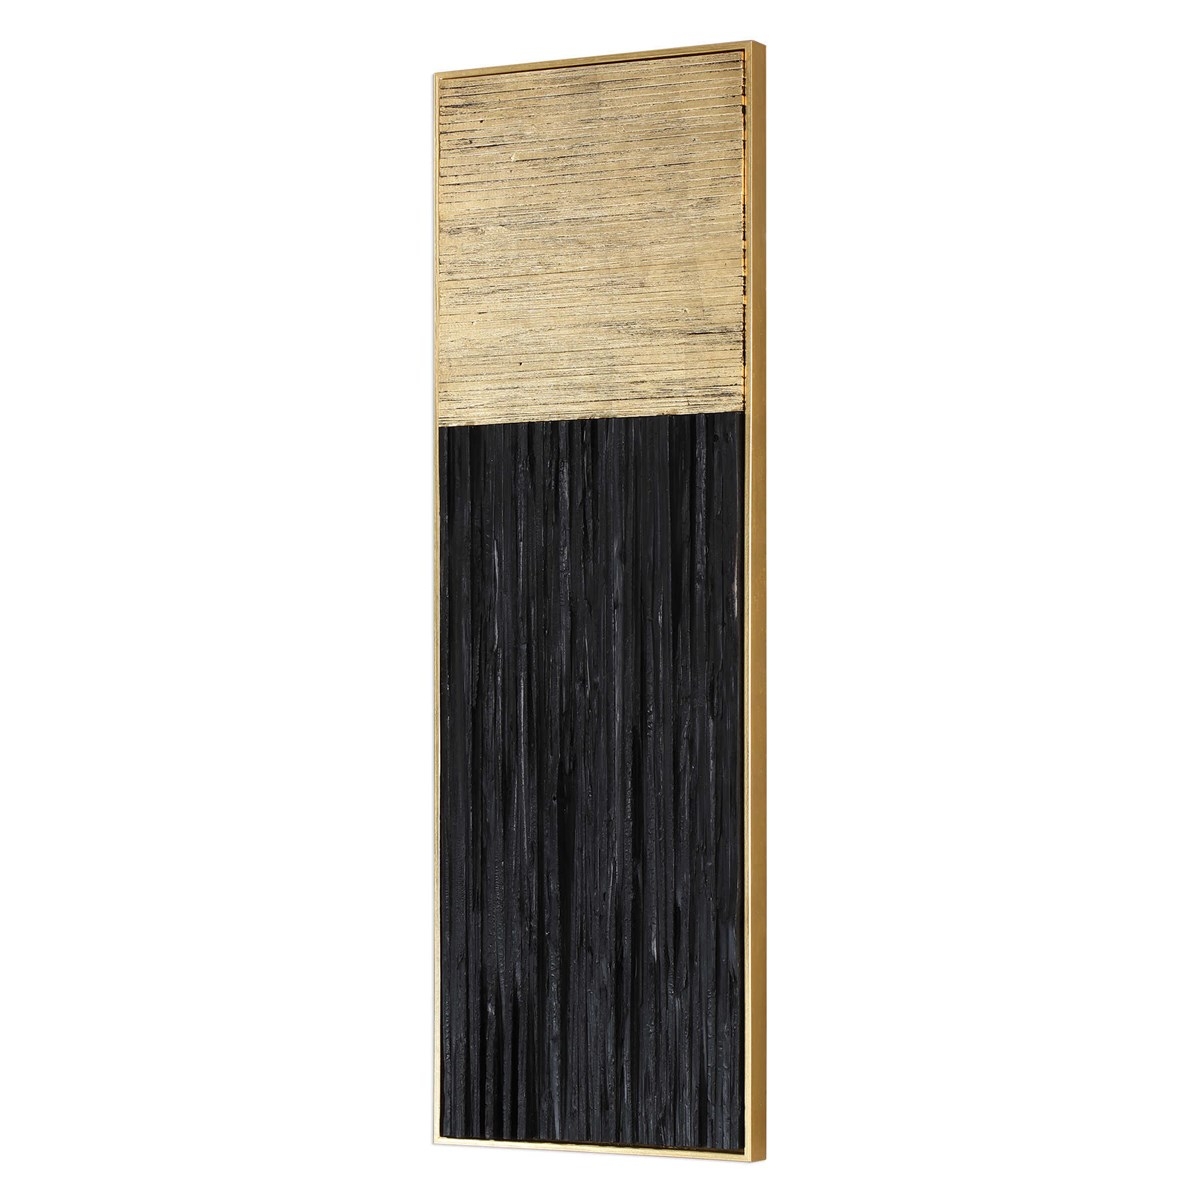 Pierra Wood Wall Panel - Image 2